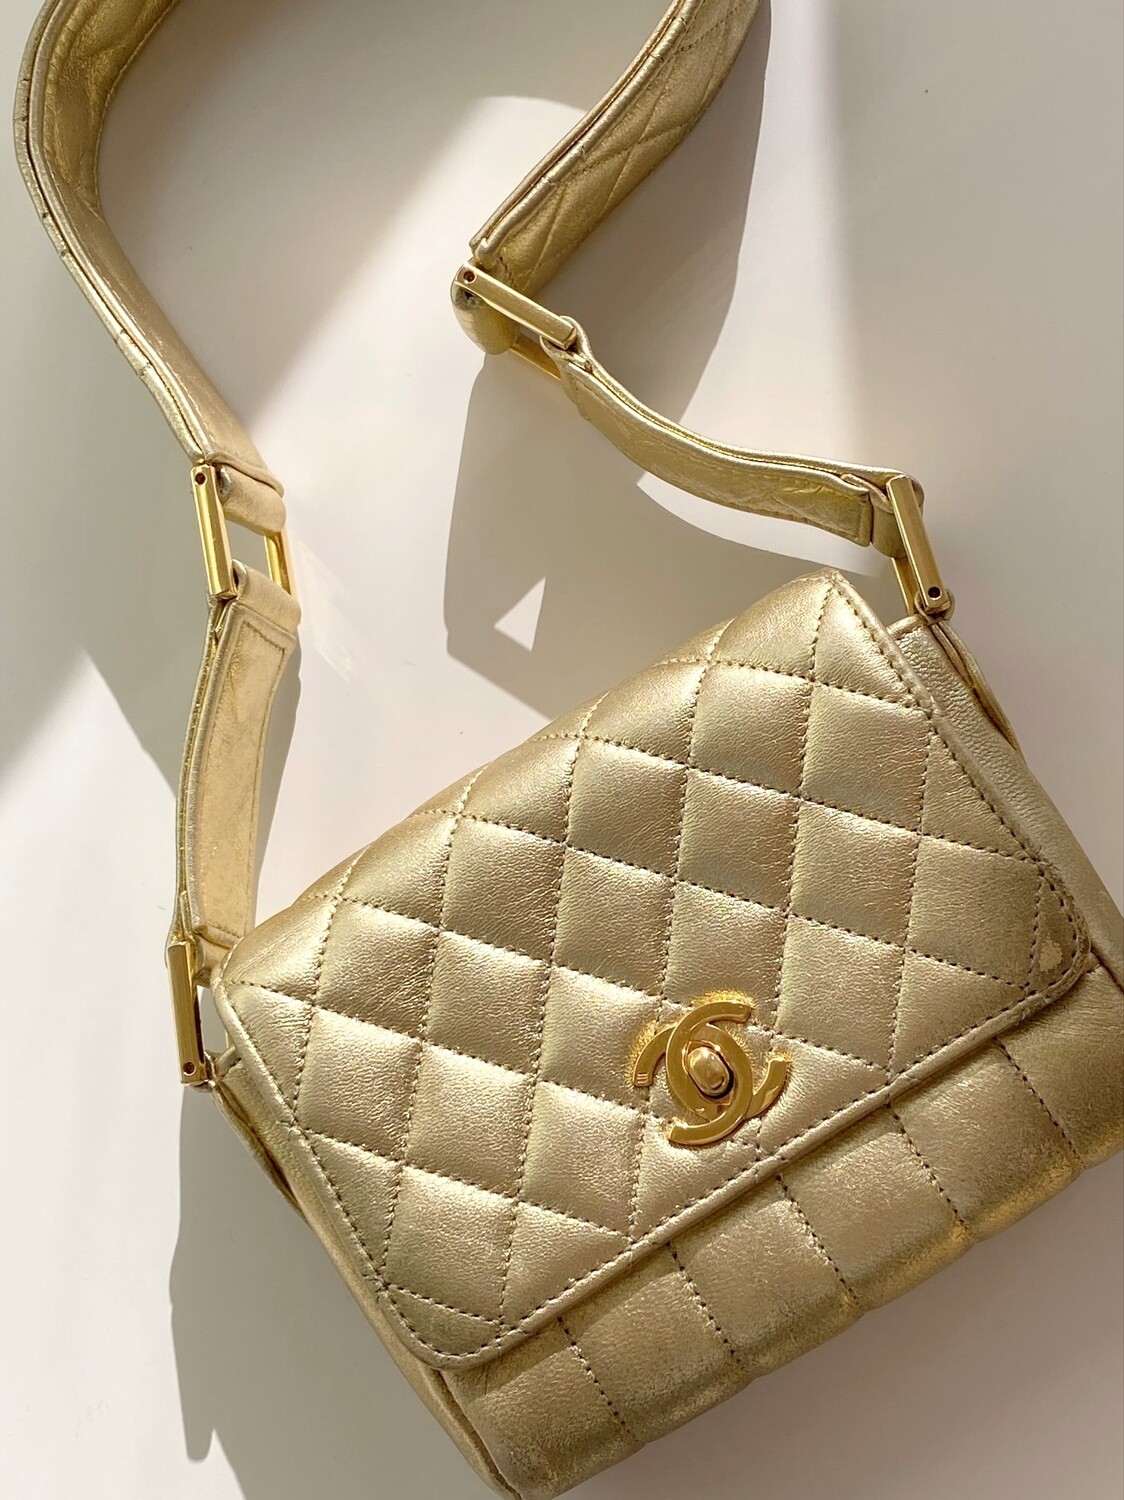 CHANEL Classic Flap Mini Square Chain Shoulder Bag Pink Caviar 25604